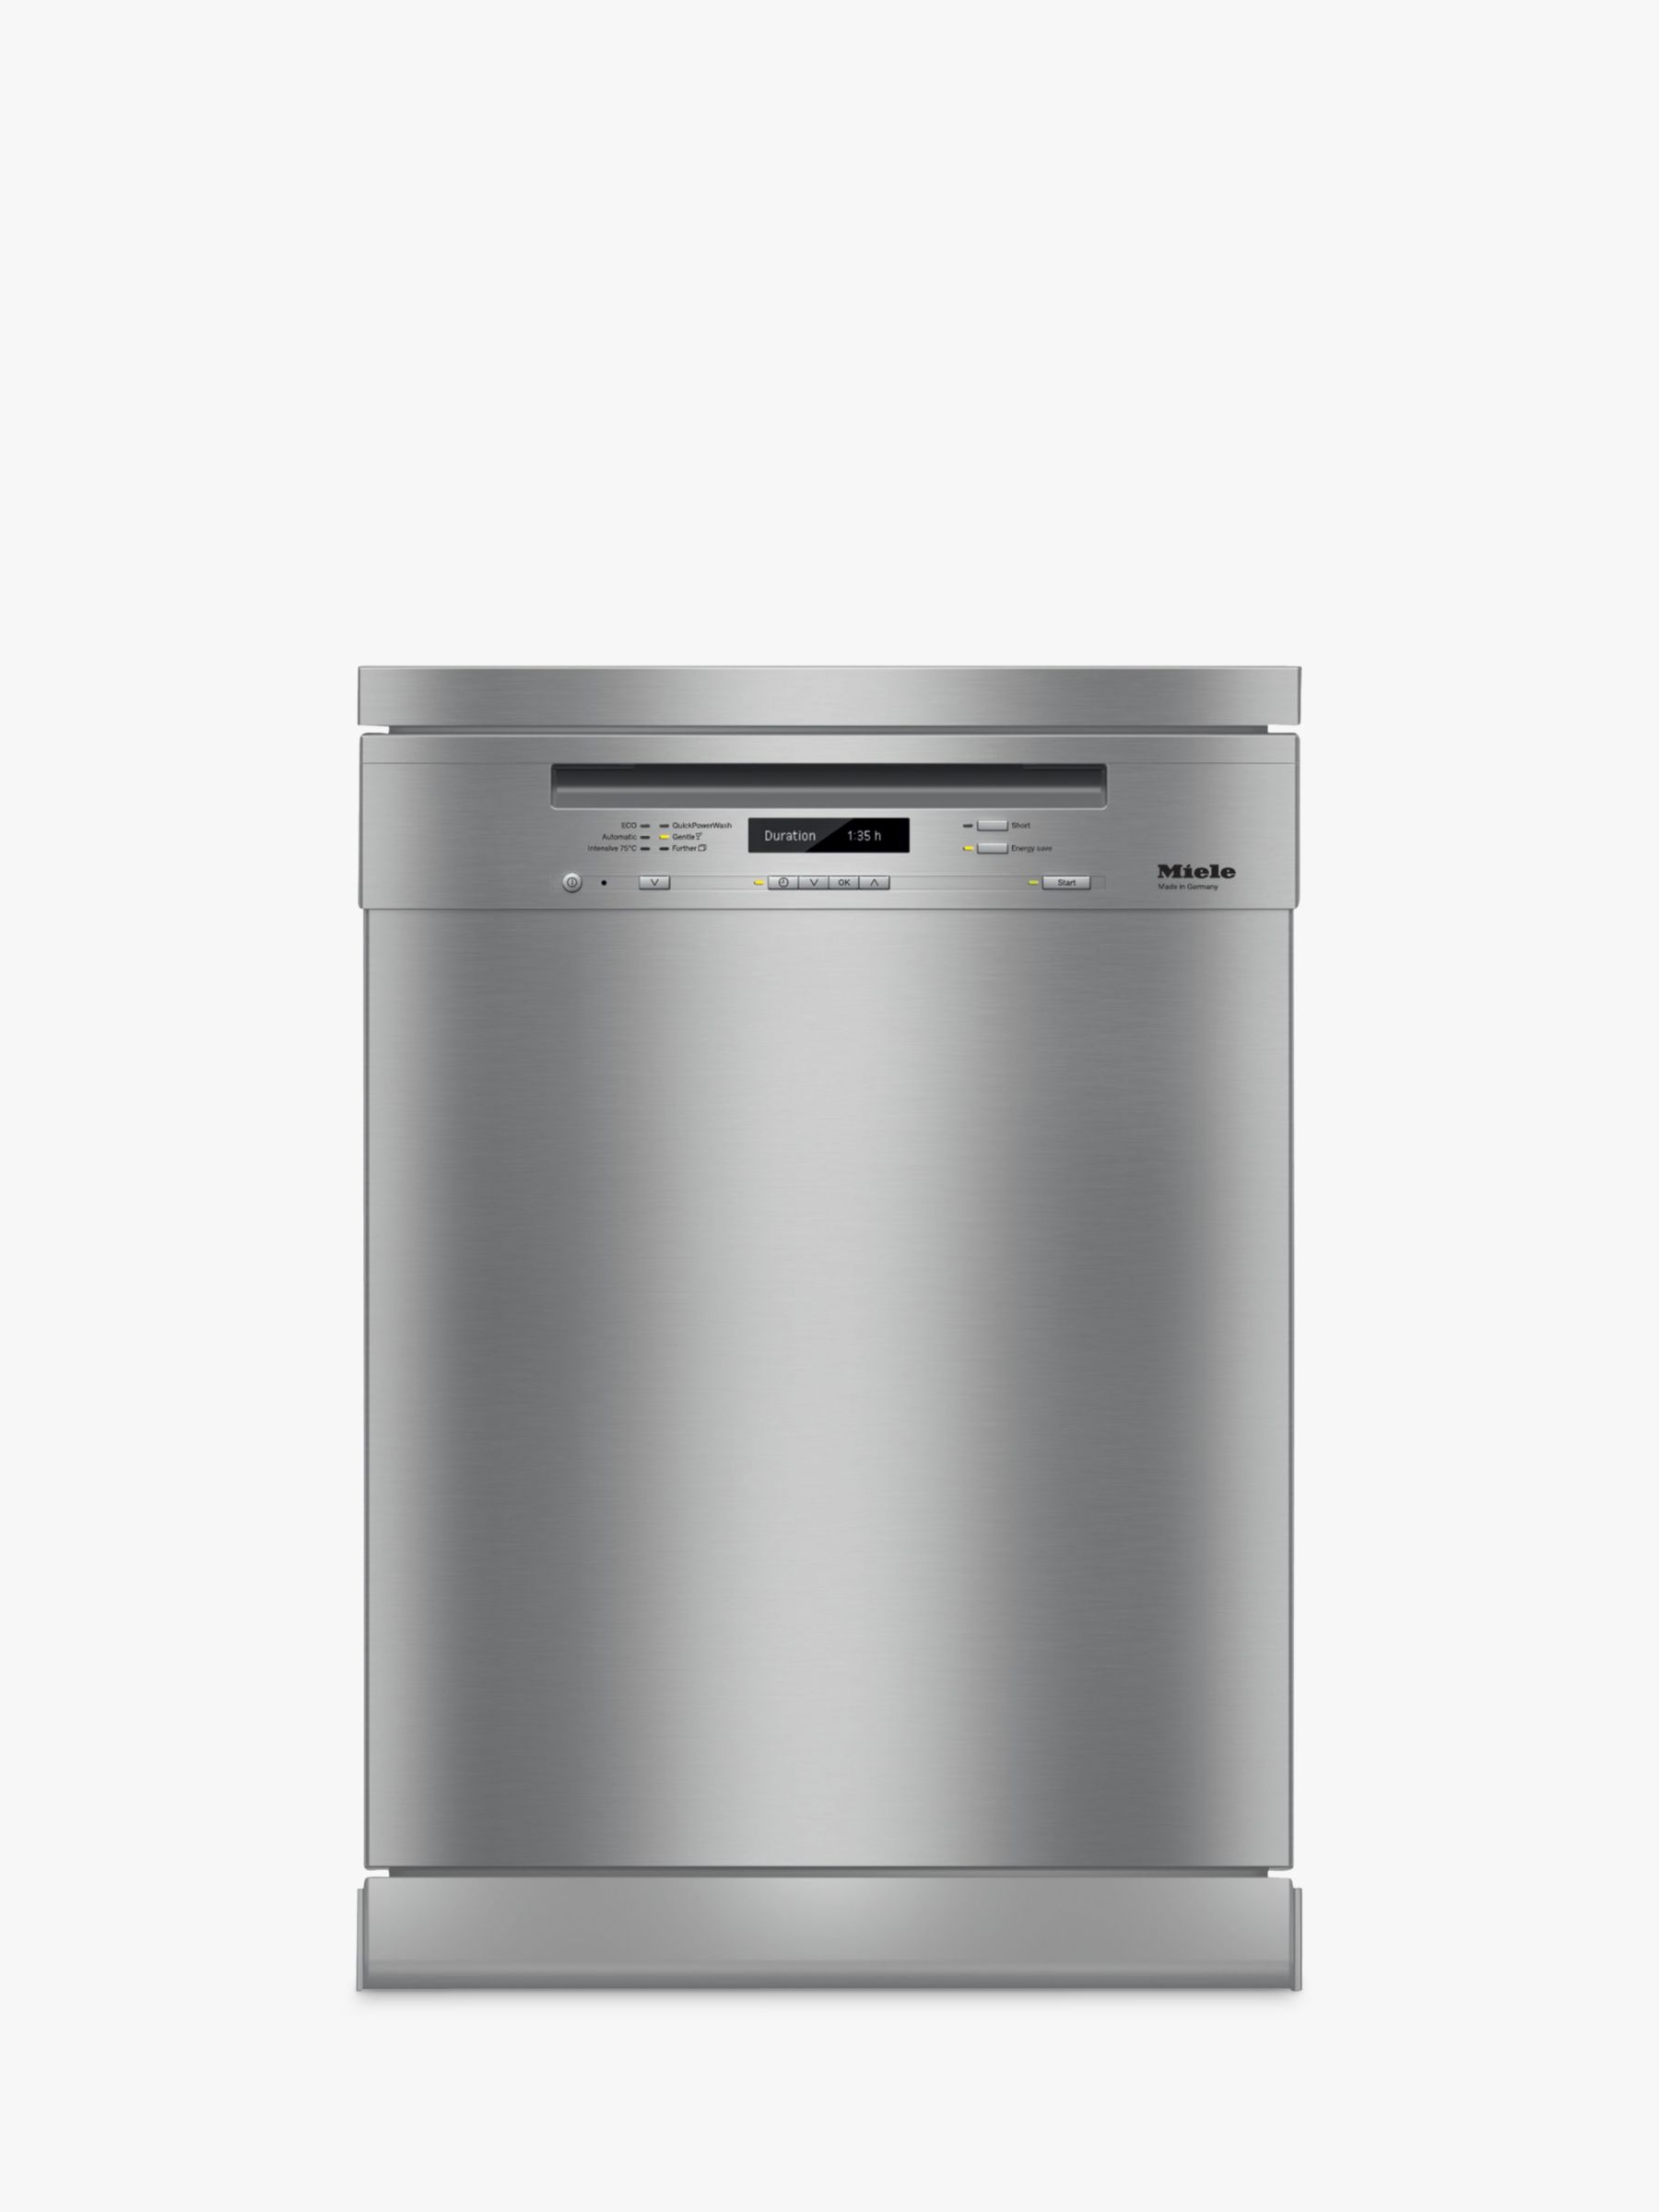 Miele G6730 SC Freestanding Dishwasher, Clean Steel